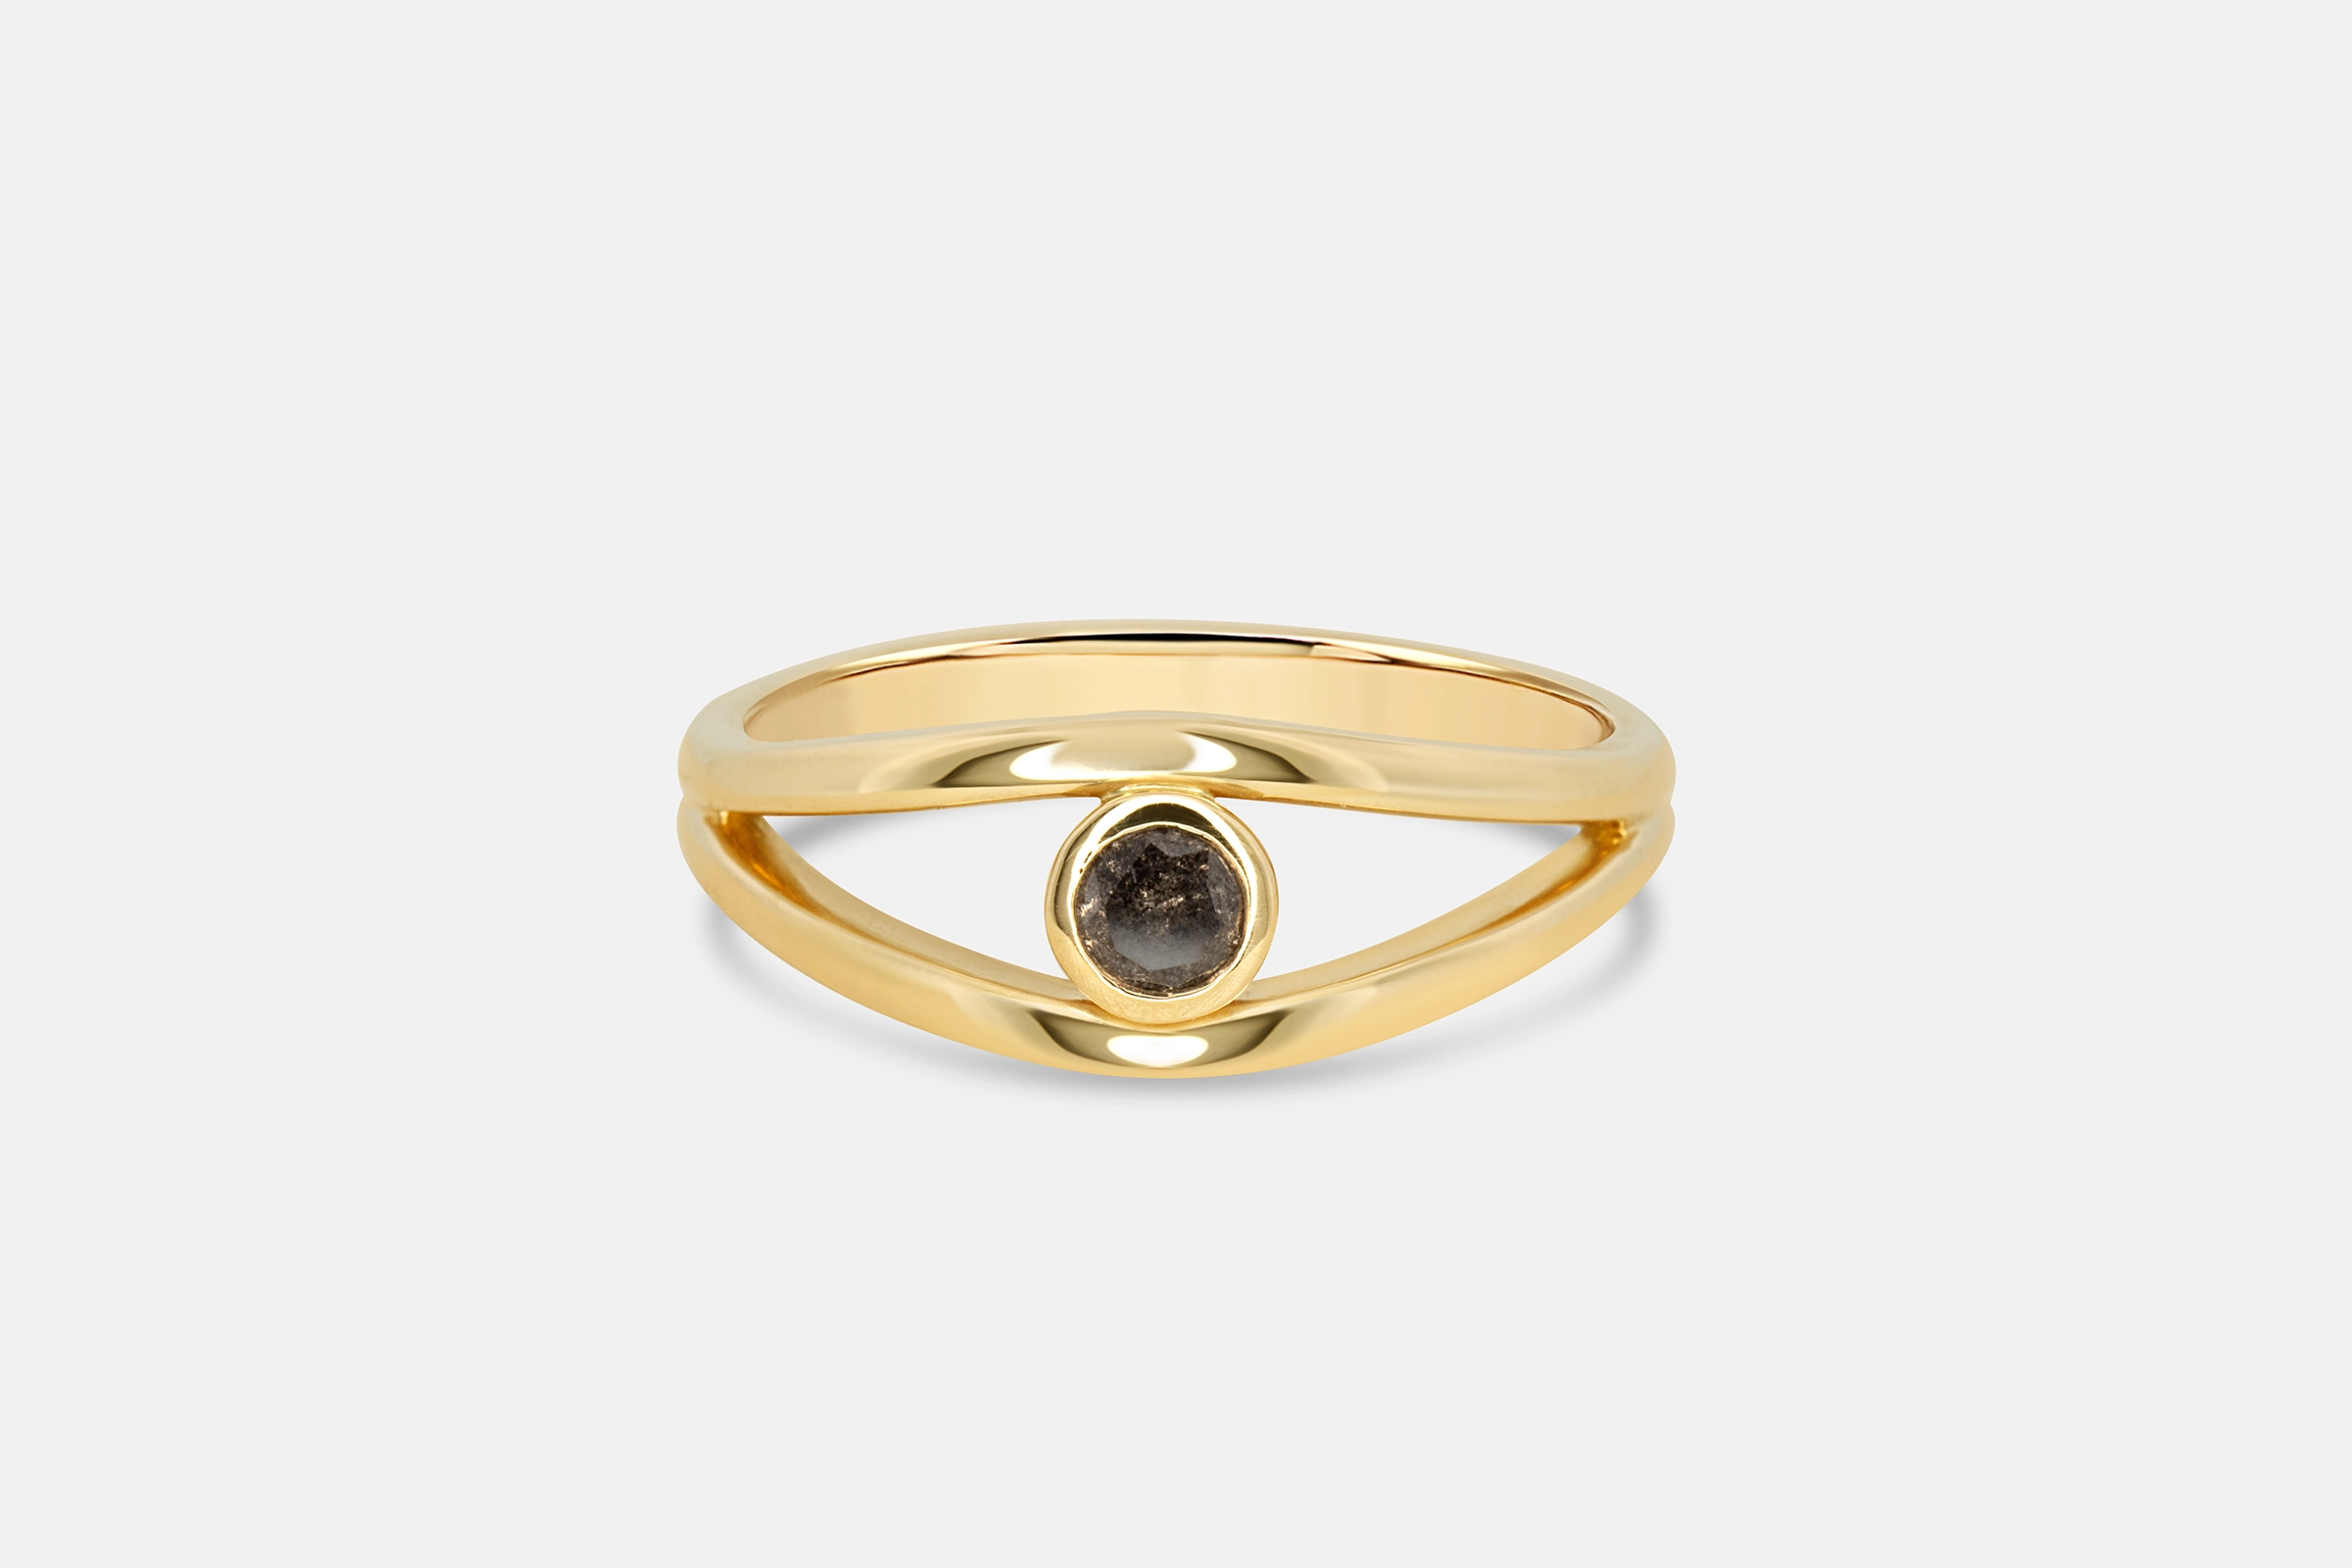 14k gold evil eye ring with grey diamond